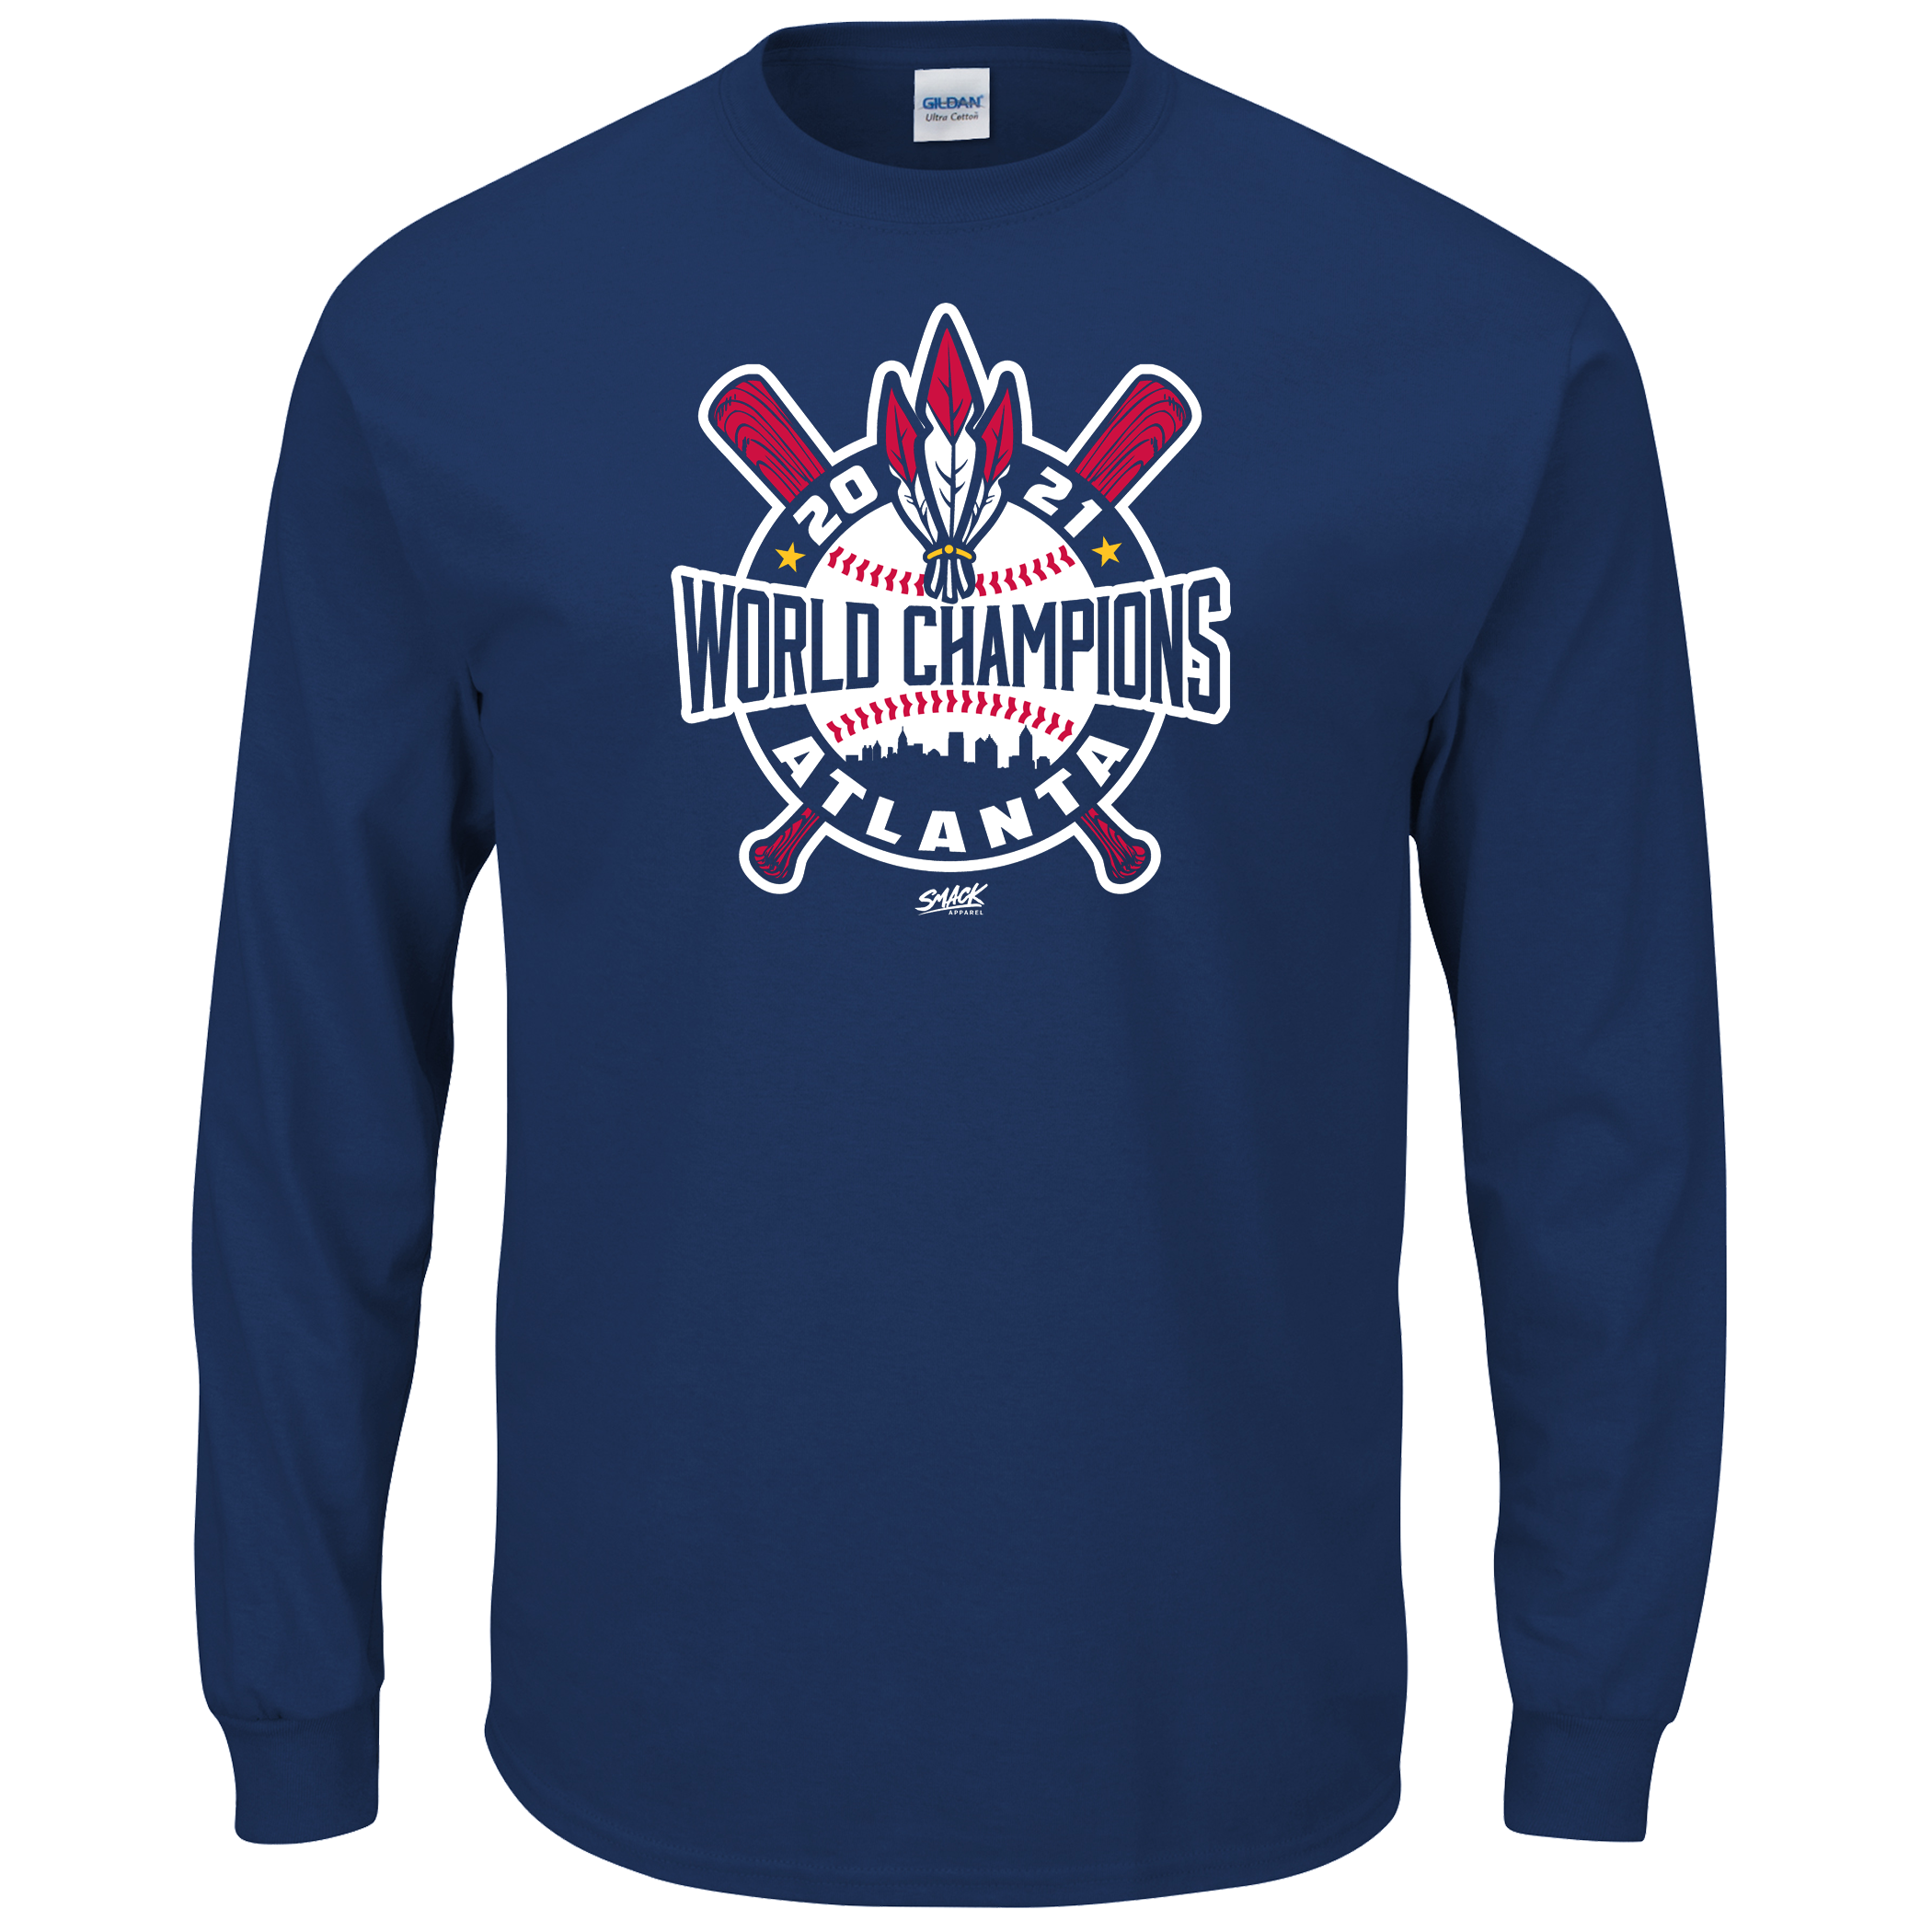 Braves World Series championship t-shirt 